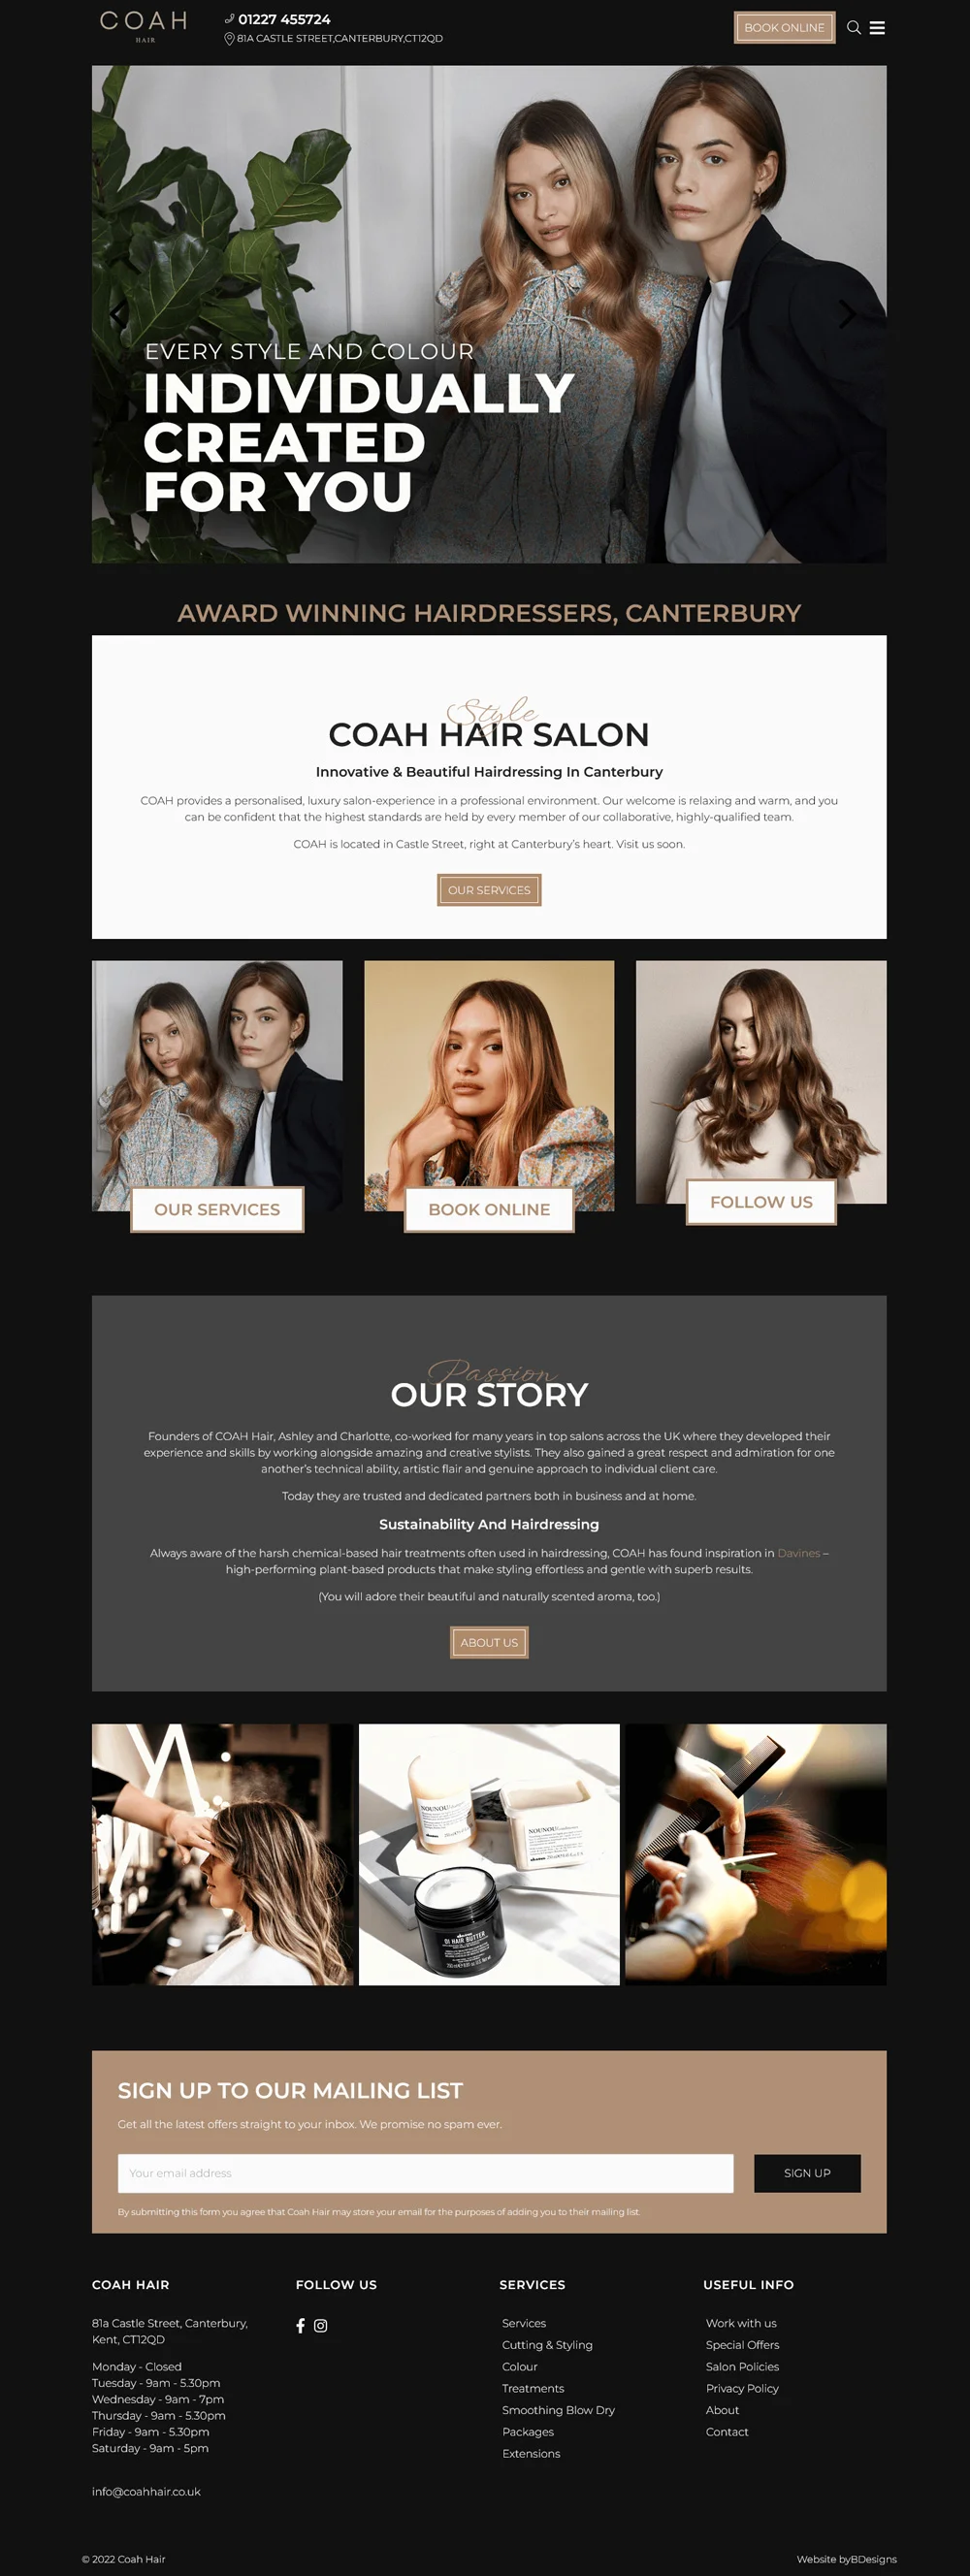 Coah Hair hairdressers website design